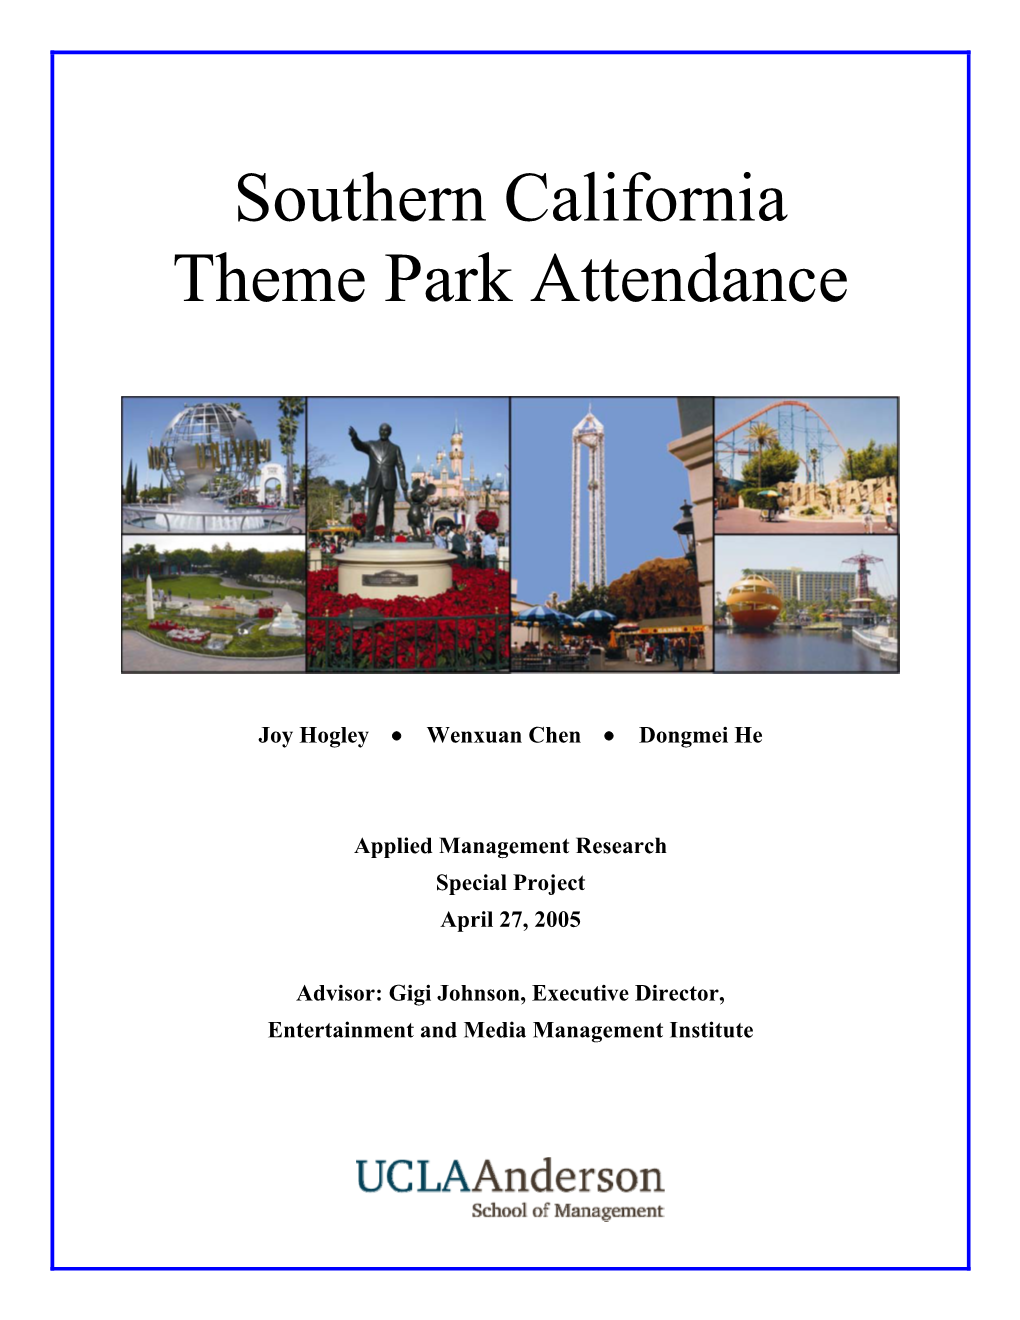 Southern California Theme Park Attendance Study